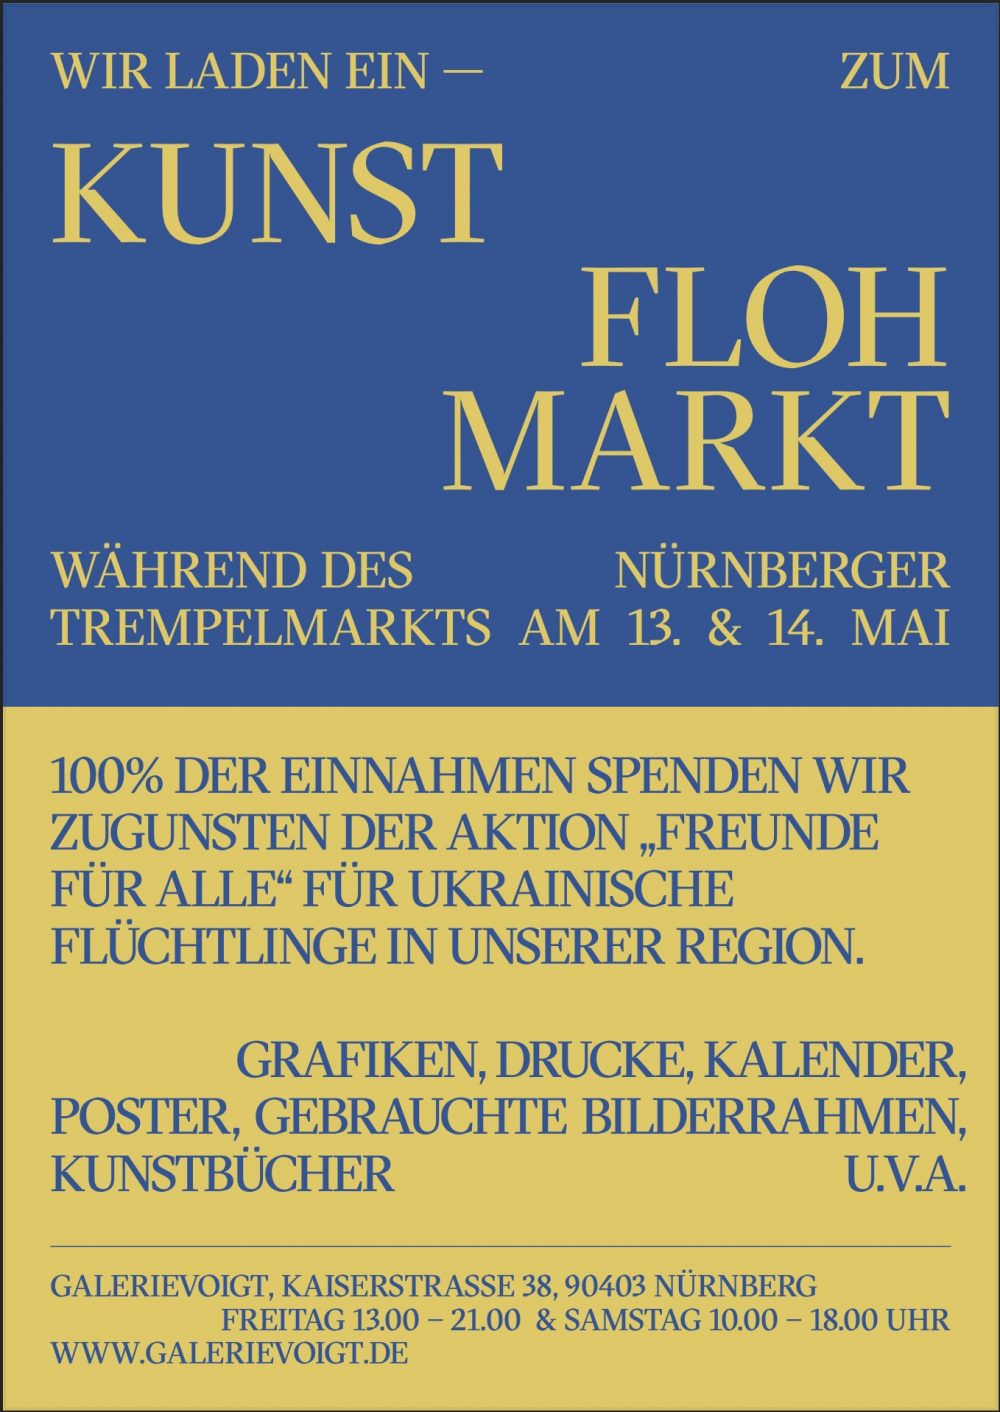 Trempelmarkt Nürnberg, Galerie Voigt Kunst, Kunstflohmarkt